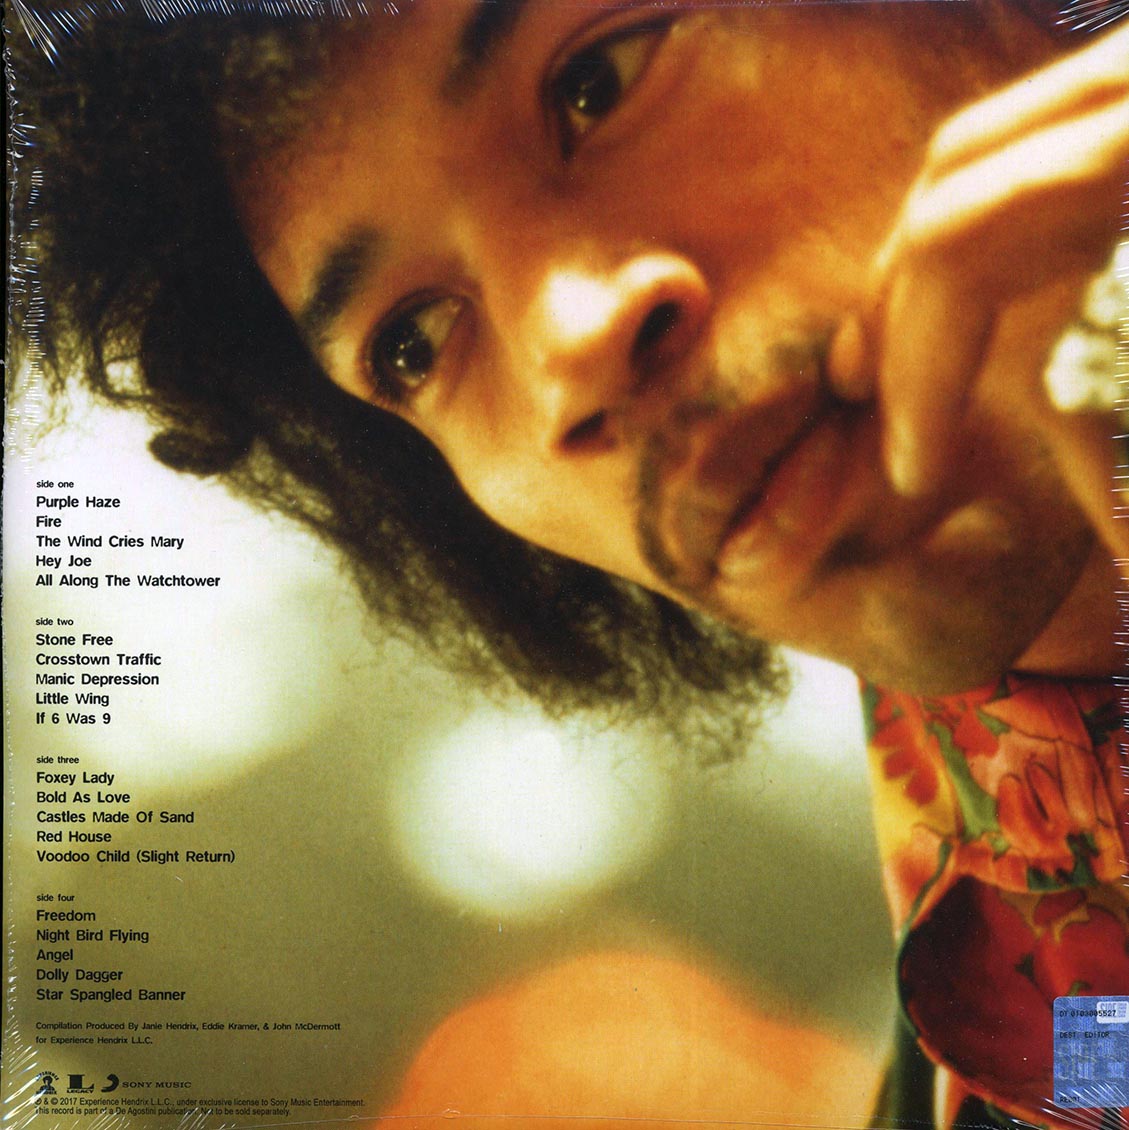 Jimi Hendrix - Experience Hendrix: The Best Of Jimi Hendrix (2xLP) (180g) (remastered) - Vinyl LP, LP